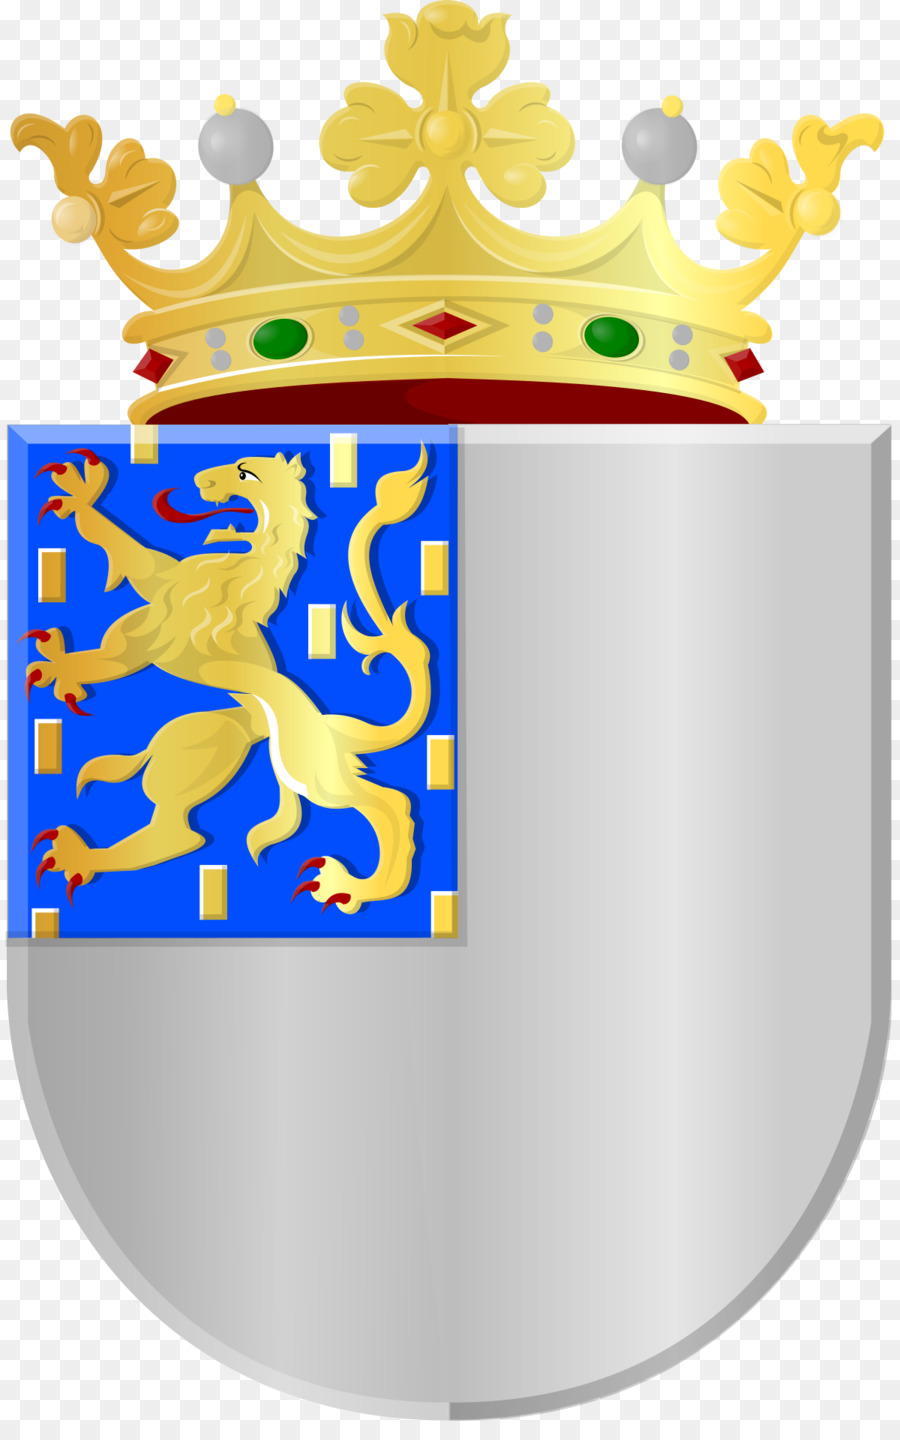 Hedel Leeds Kerkdriel Wappen von Maasdriel Wappen - andere